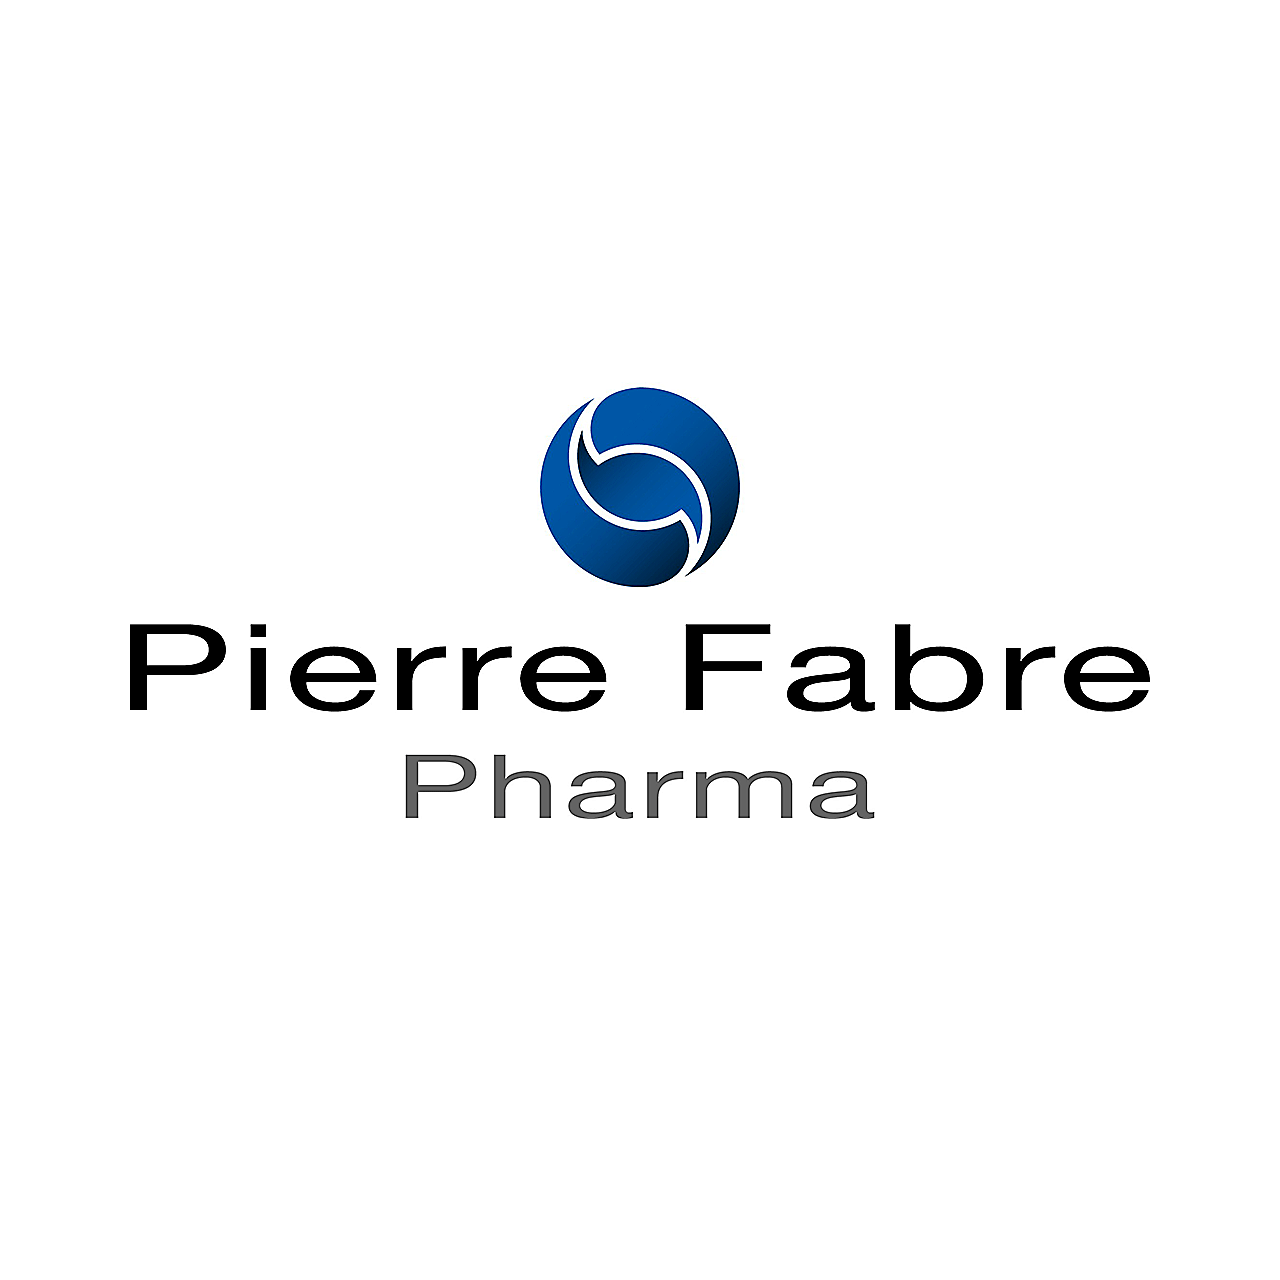 logo cmc sponsor 04 bronze logo pierrefabre pharma